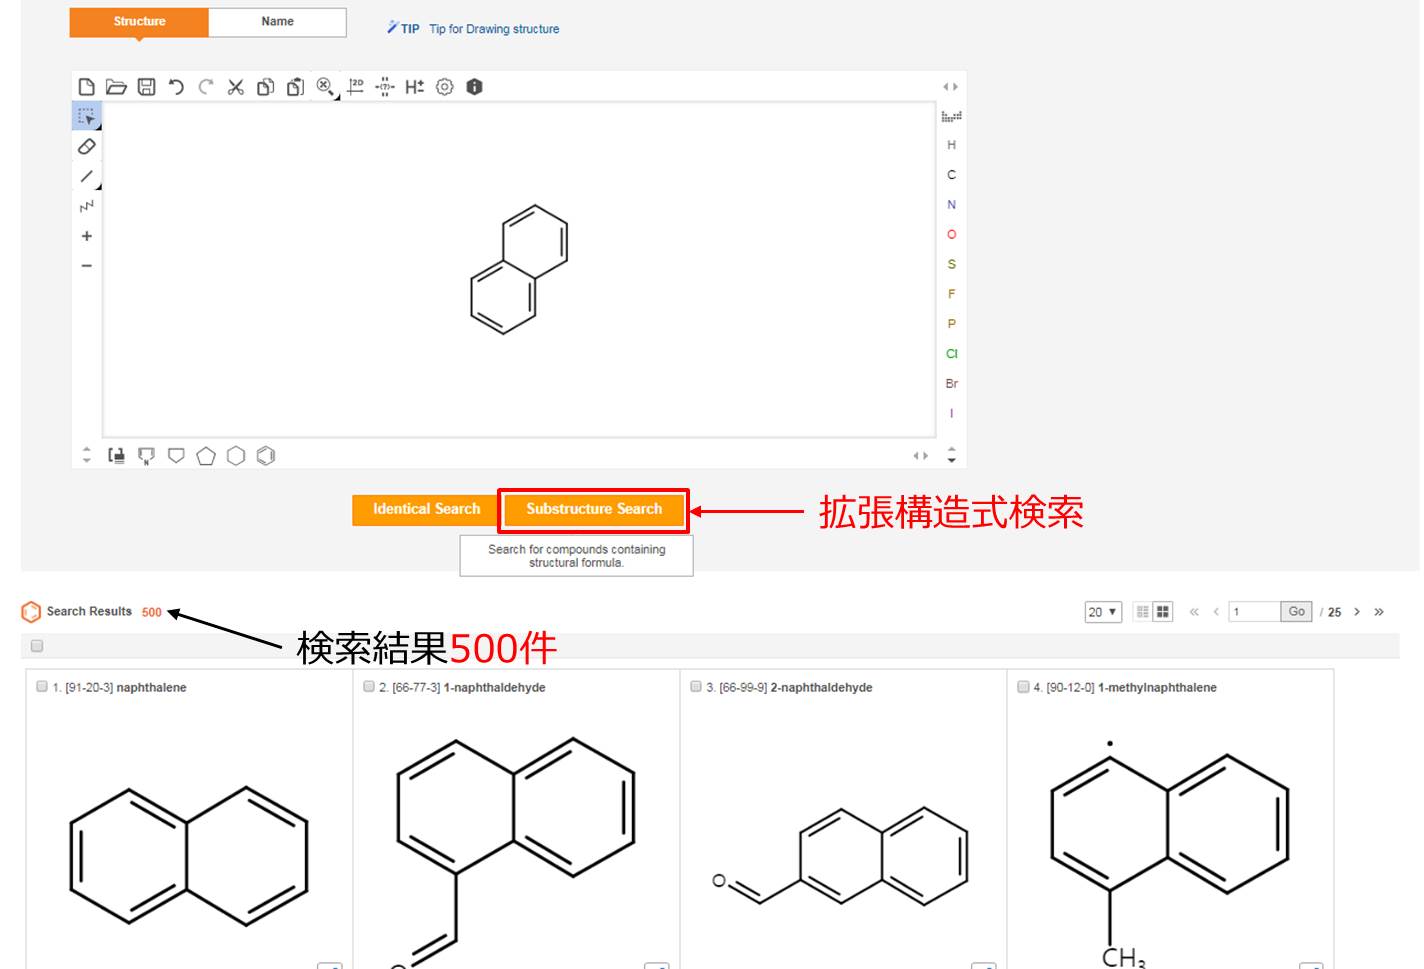 Wips Japan Wips Global 化学式を利用して特許を検索する方法